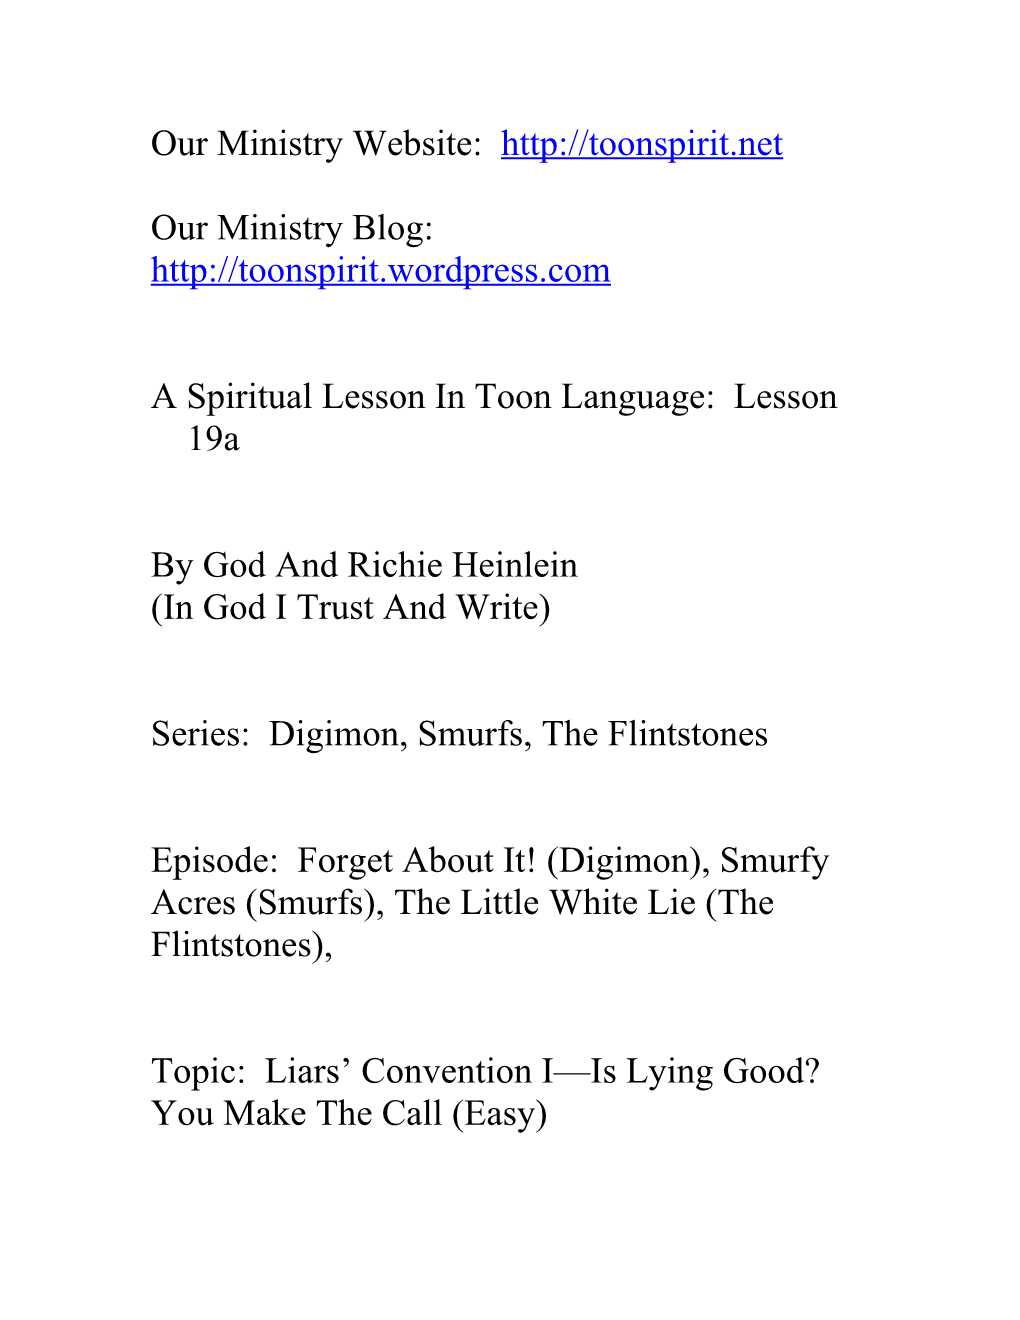 A Spiritual Lesson in Toon Language: Lesson 19A